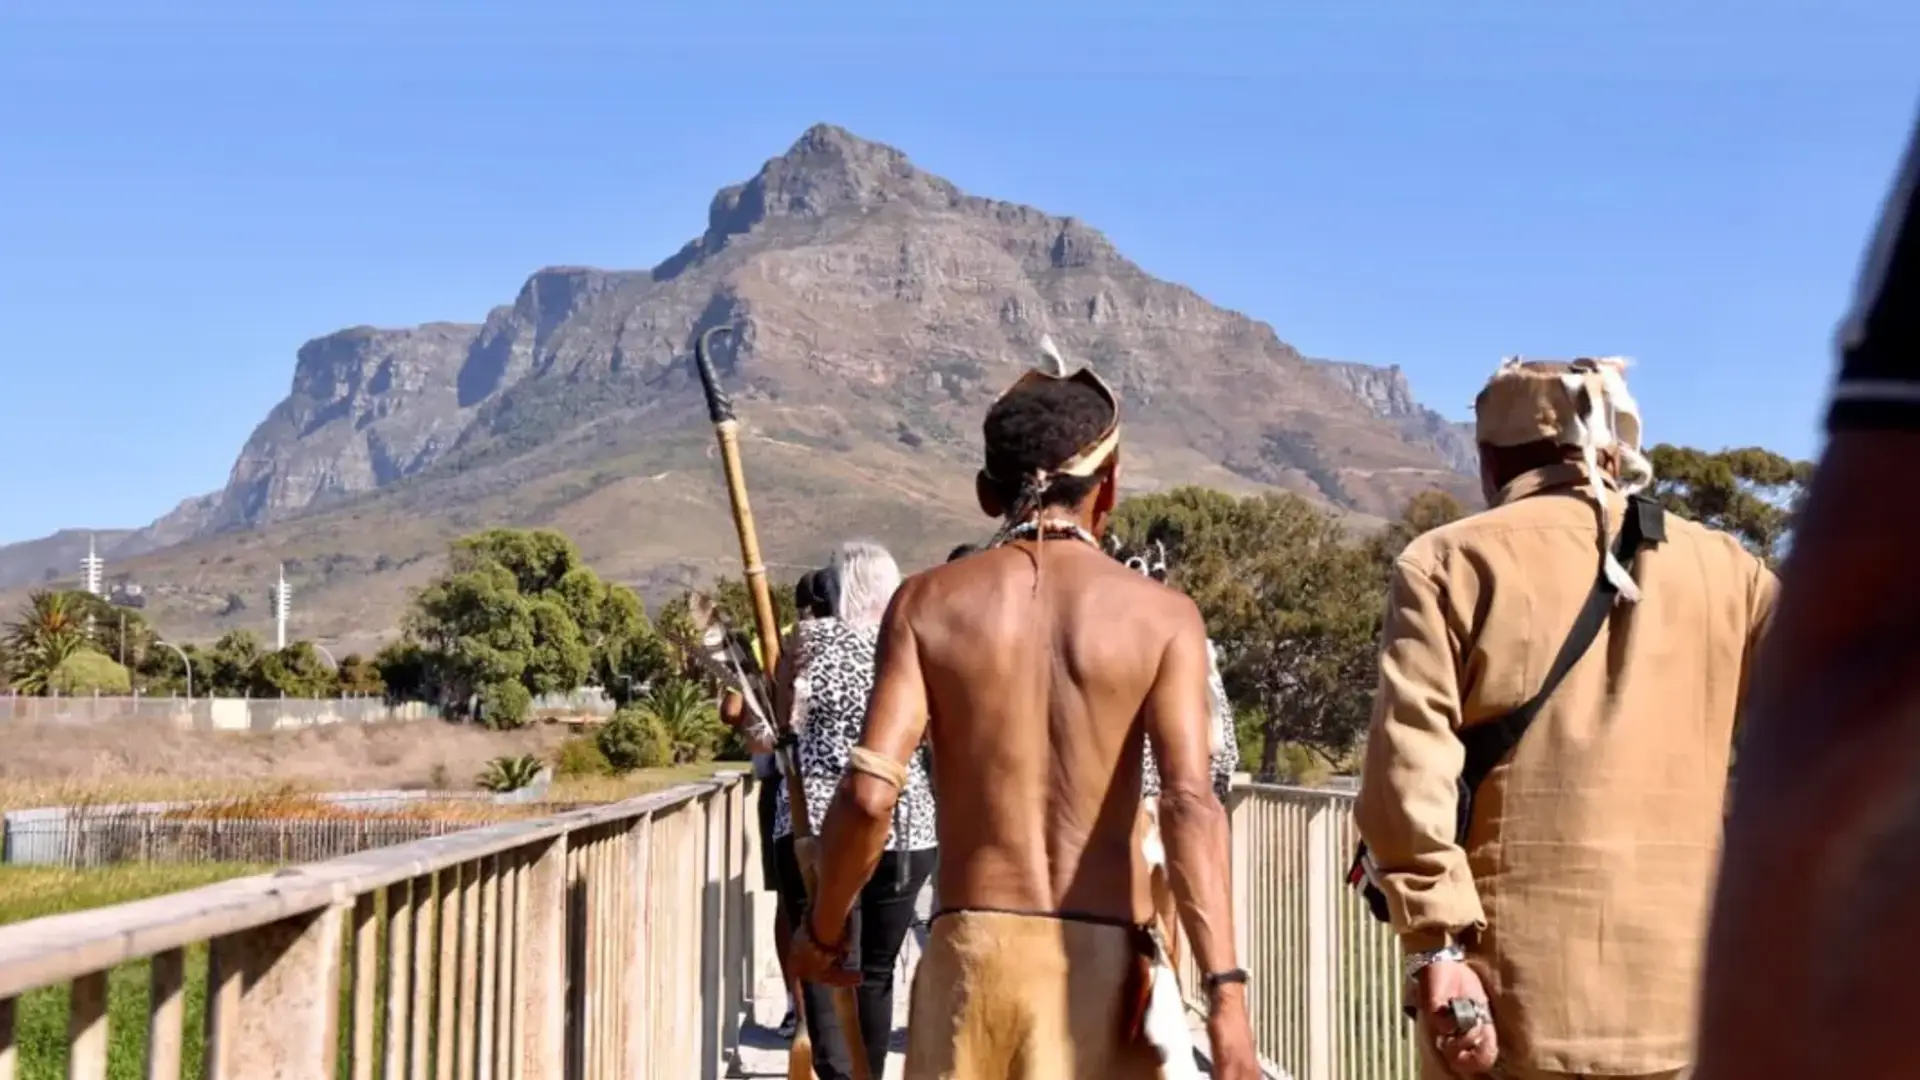 Khoisan men crossing a pedestrian bridge